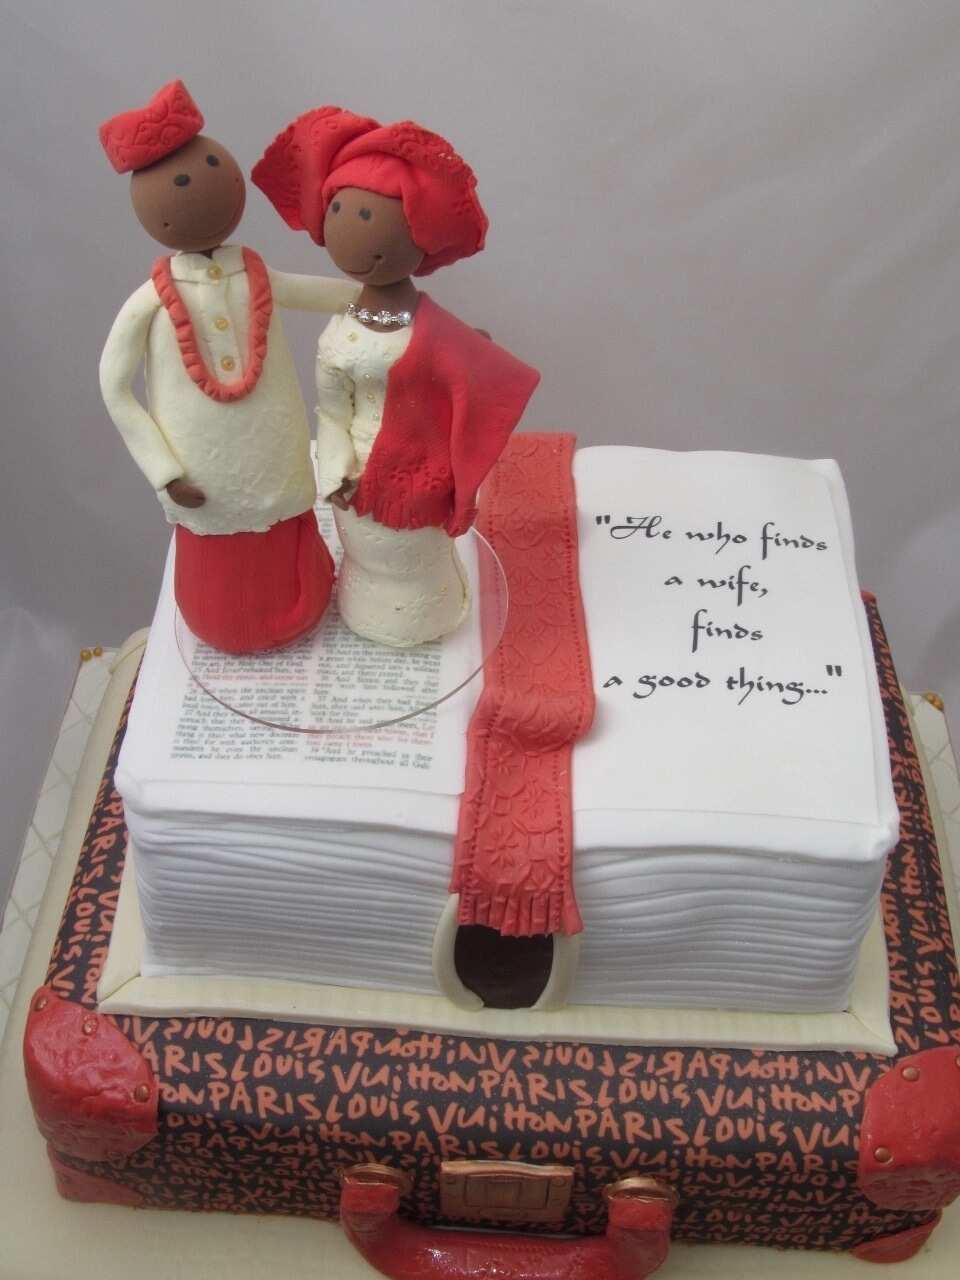 Yoruba wedding cake